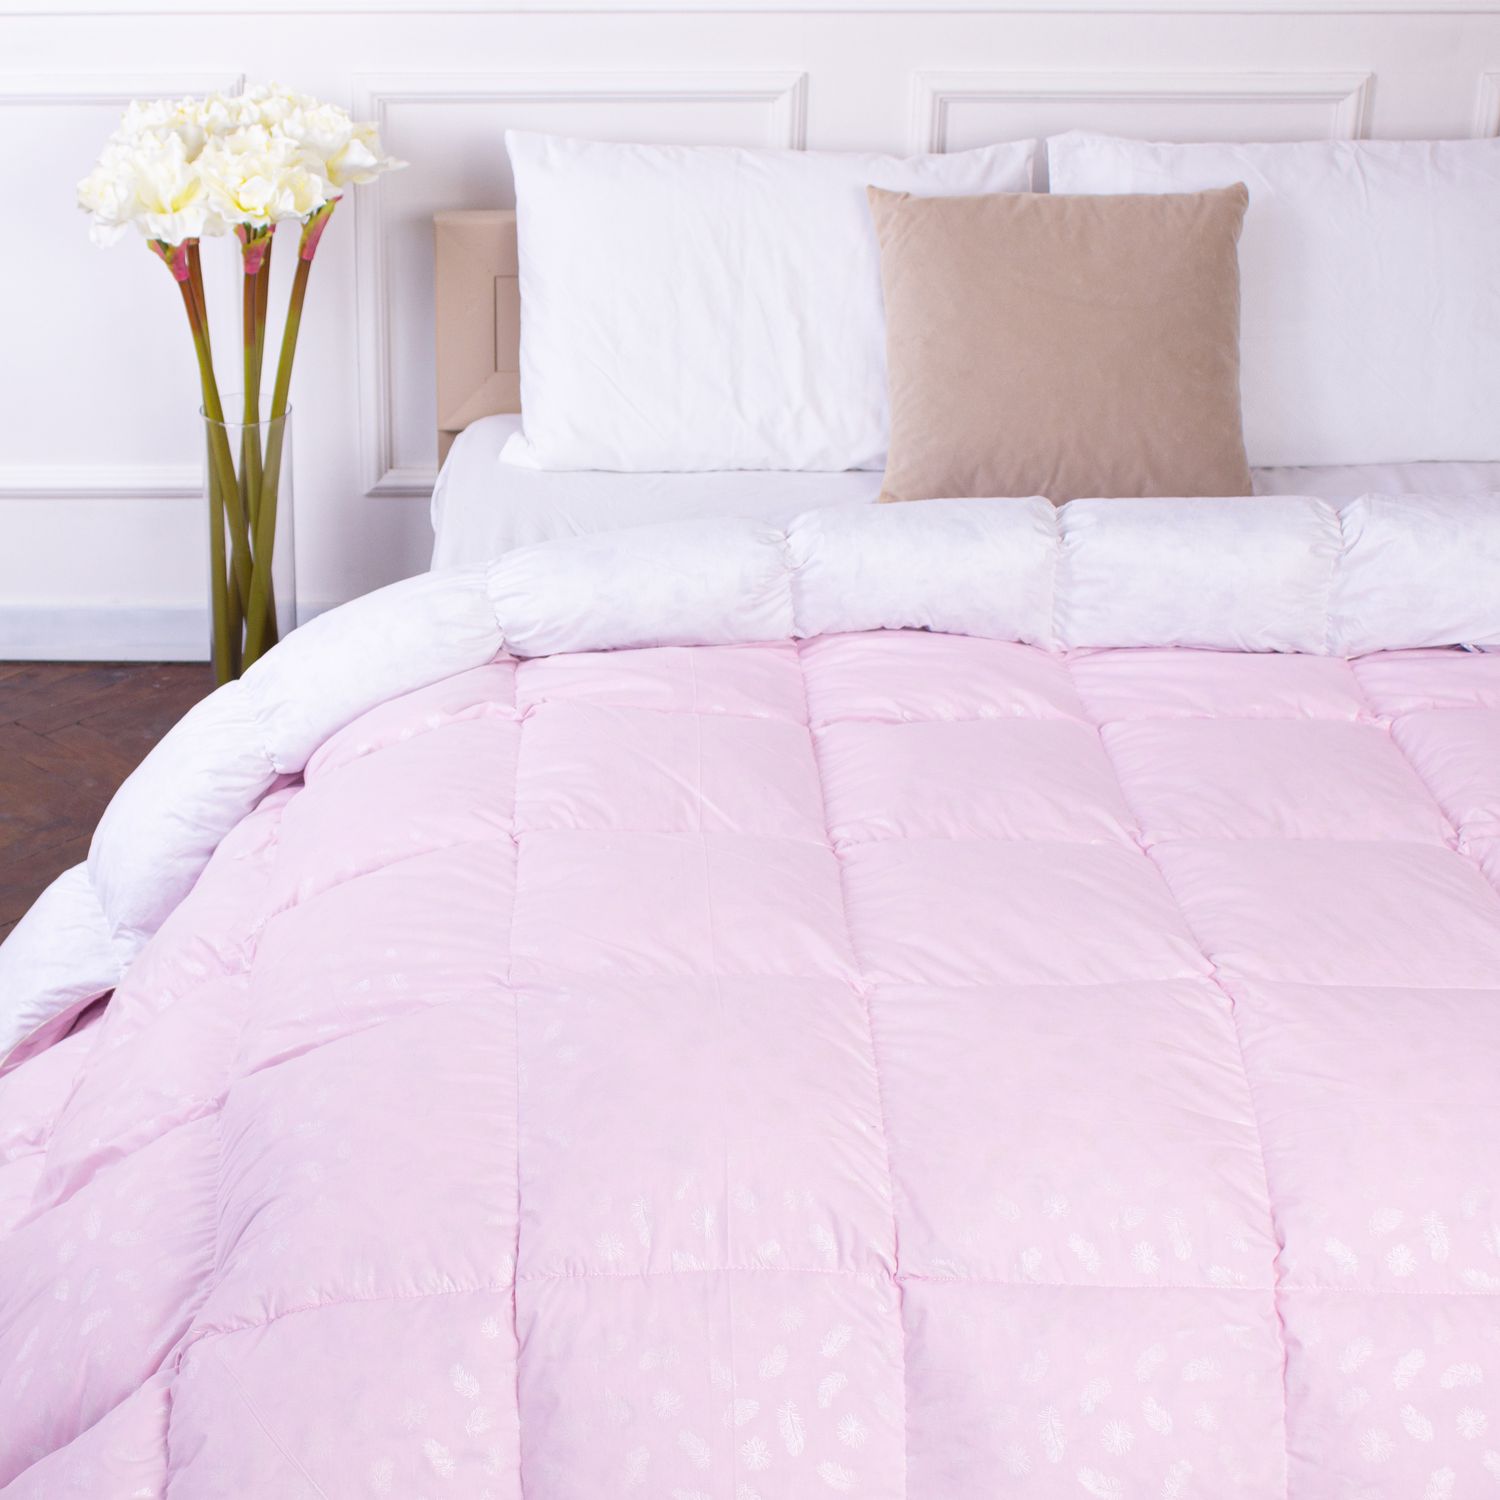 Одеяло пуховое MirSon Karmen №1844 Bio-Pink, 50% пух, евростандарт, 220x200, розовое (2200003013849) - фото 4